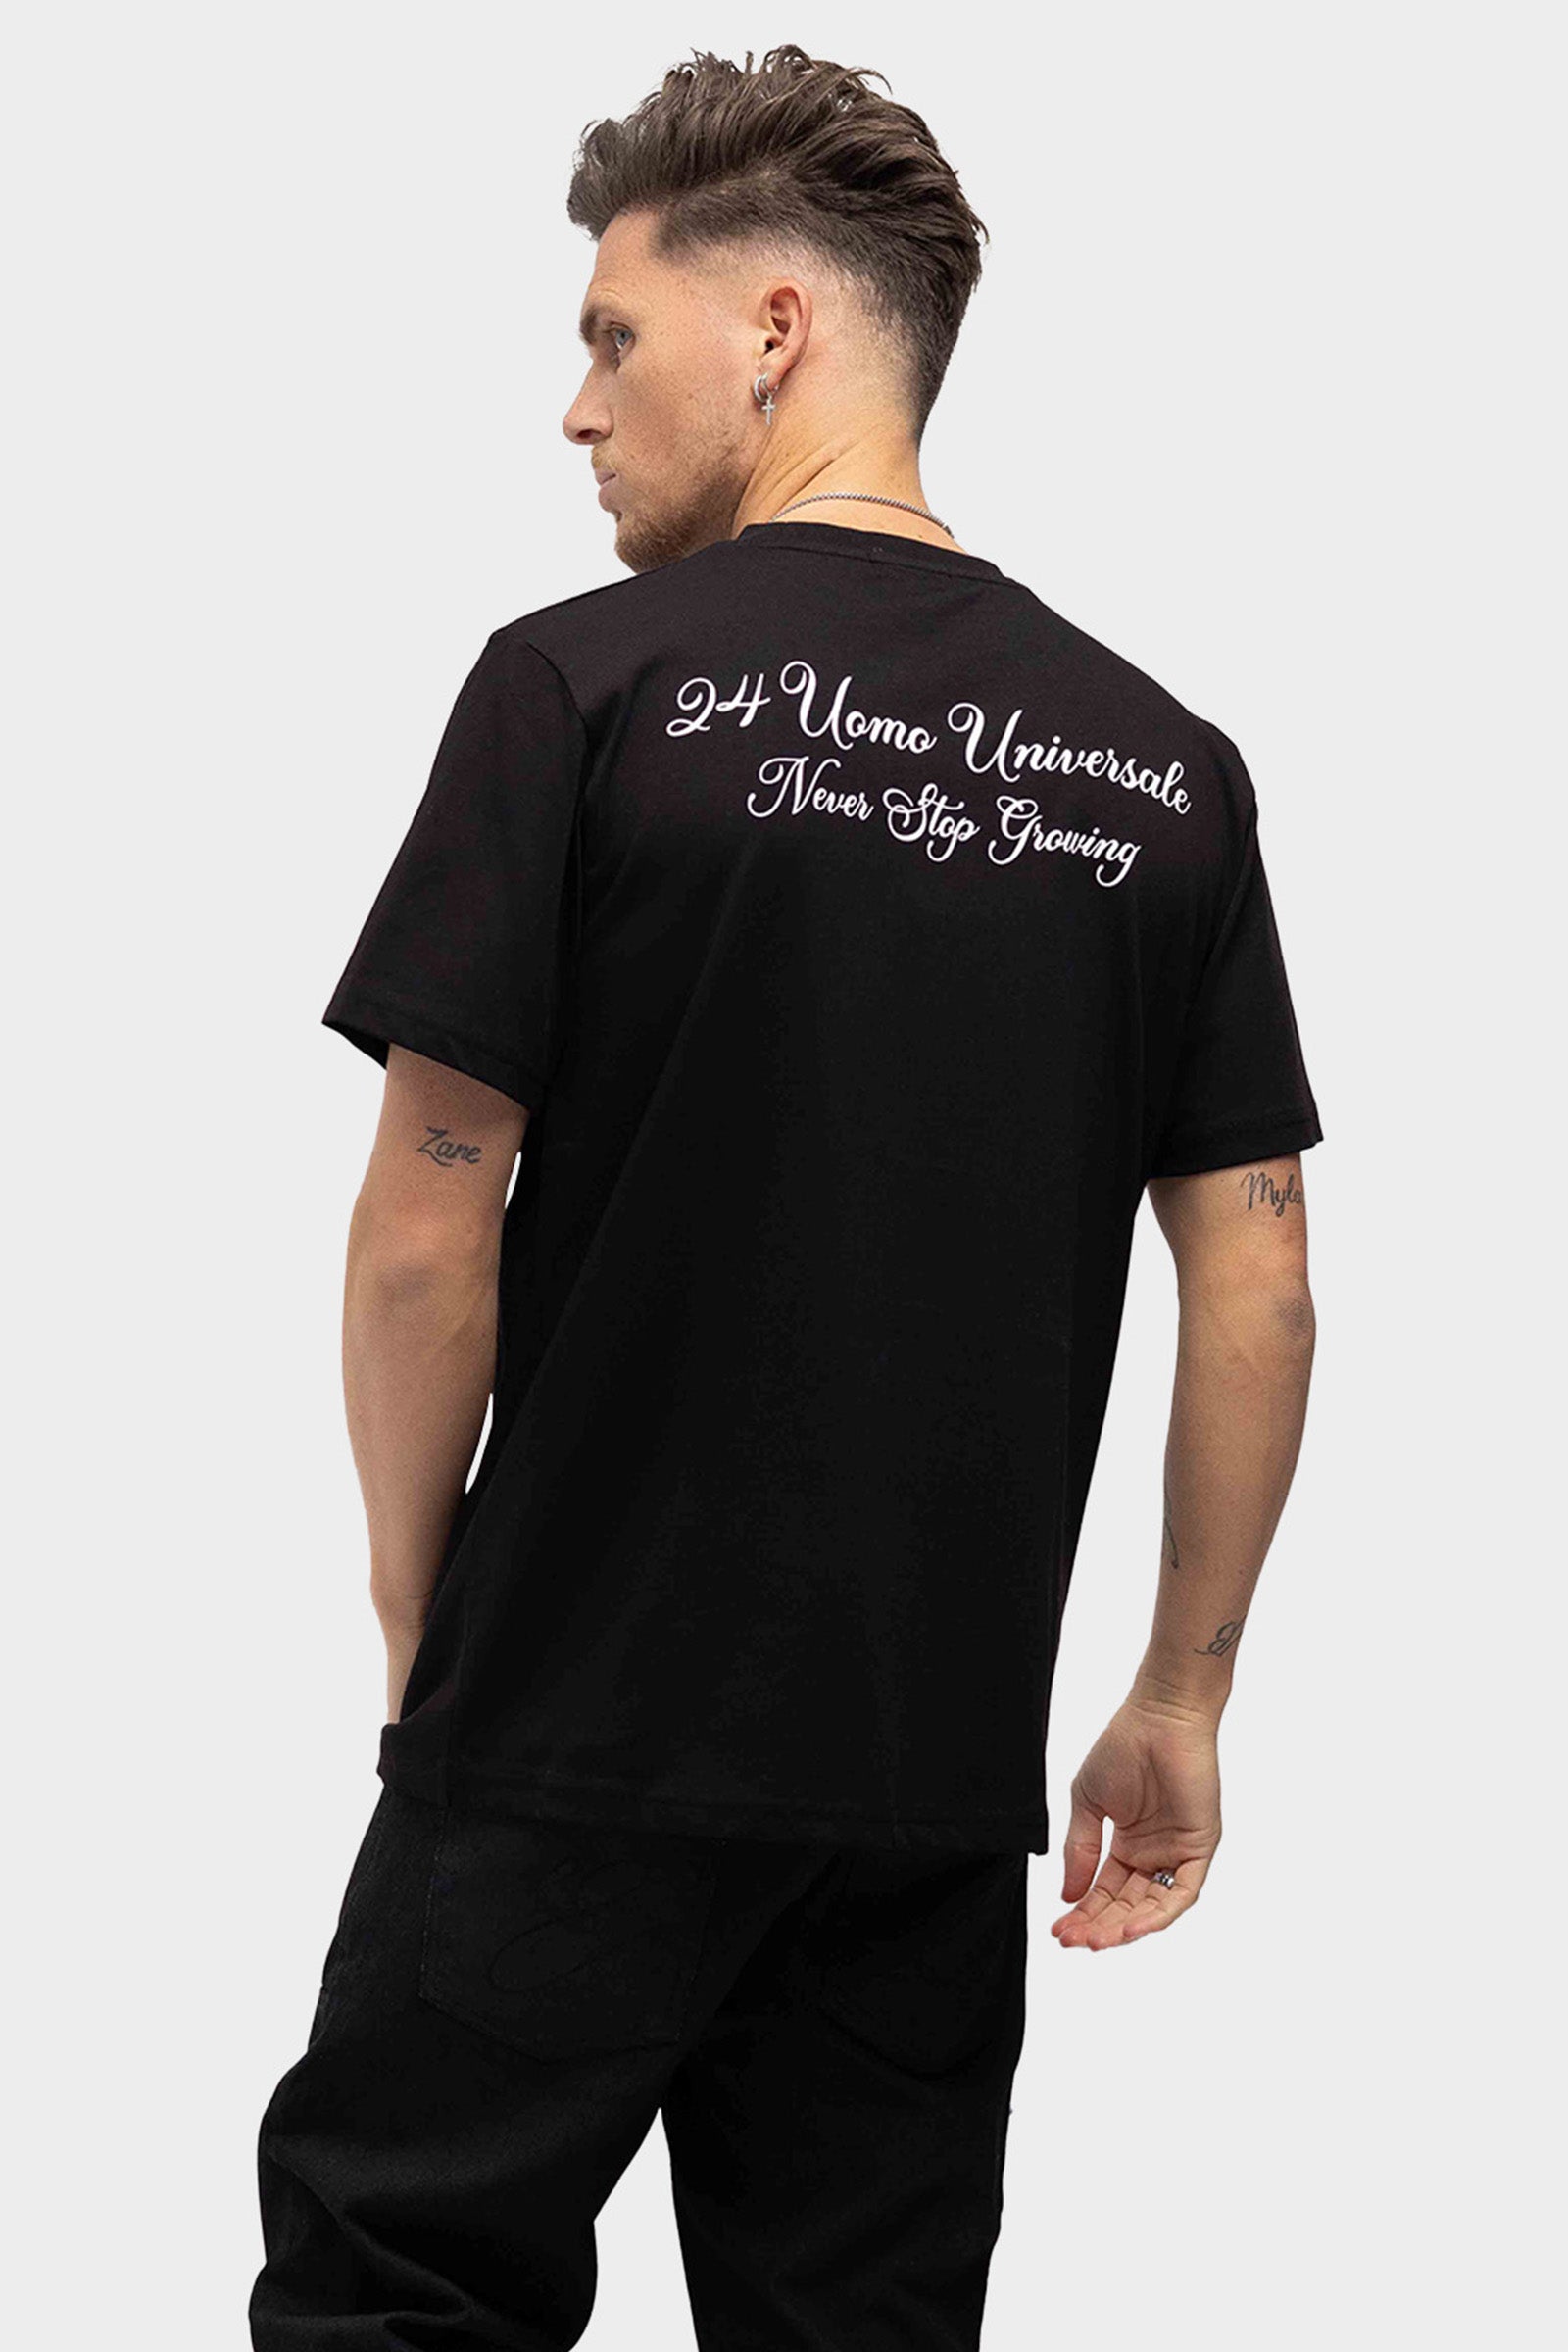 24 Uomo Universale 2.0 T-shirt Zwart PRE-ORDER 5 APRIL